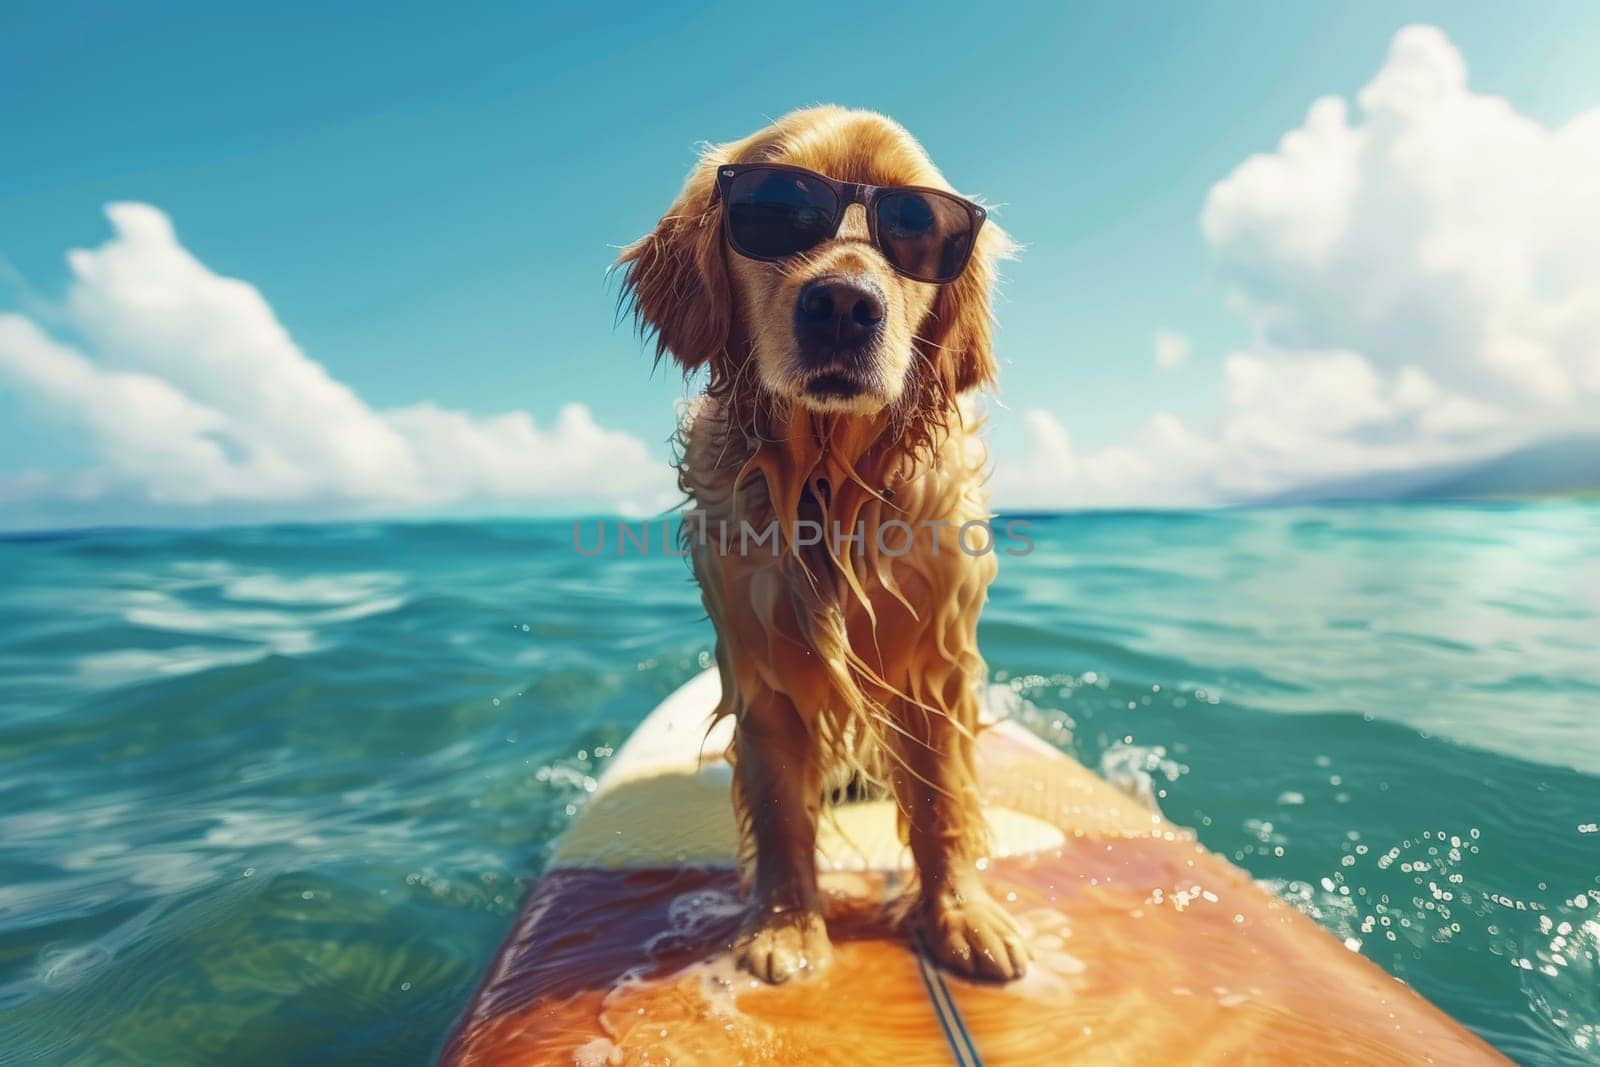 a dog wearing sunglasses riding a surfboard, summer activity by nijieimu